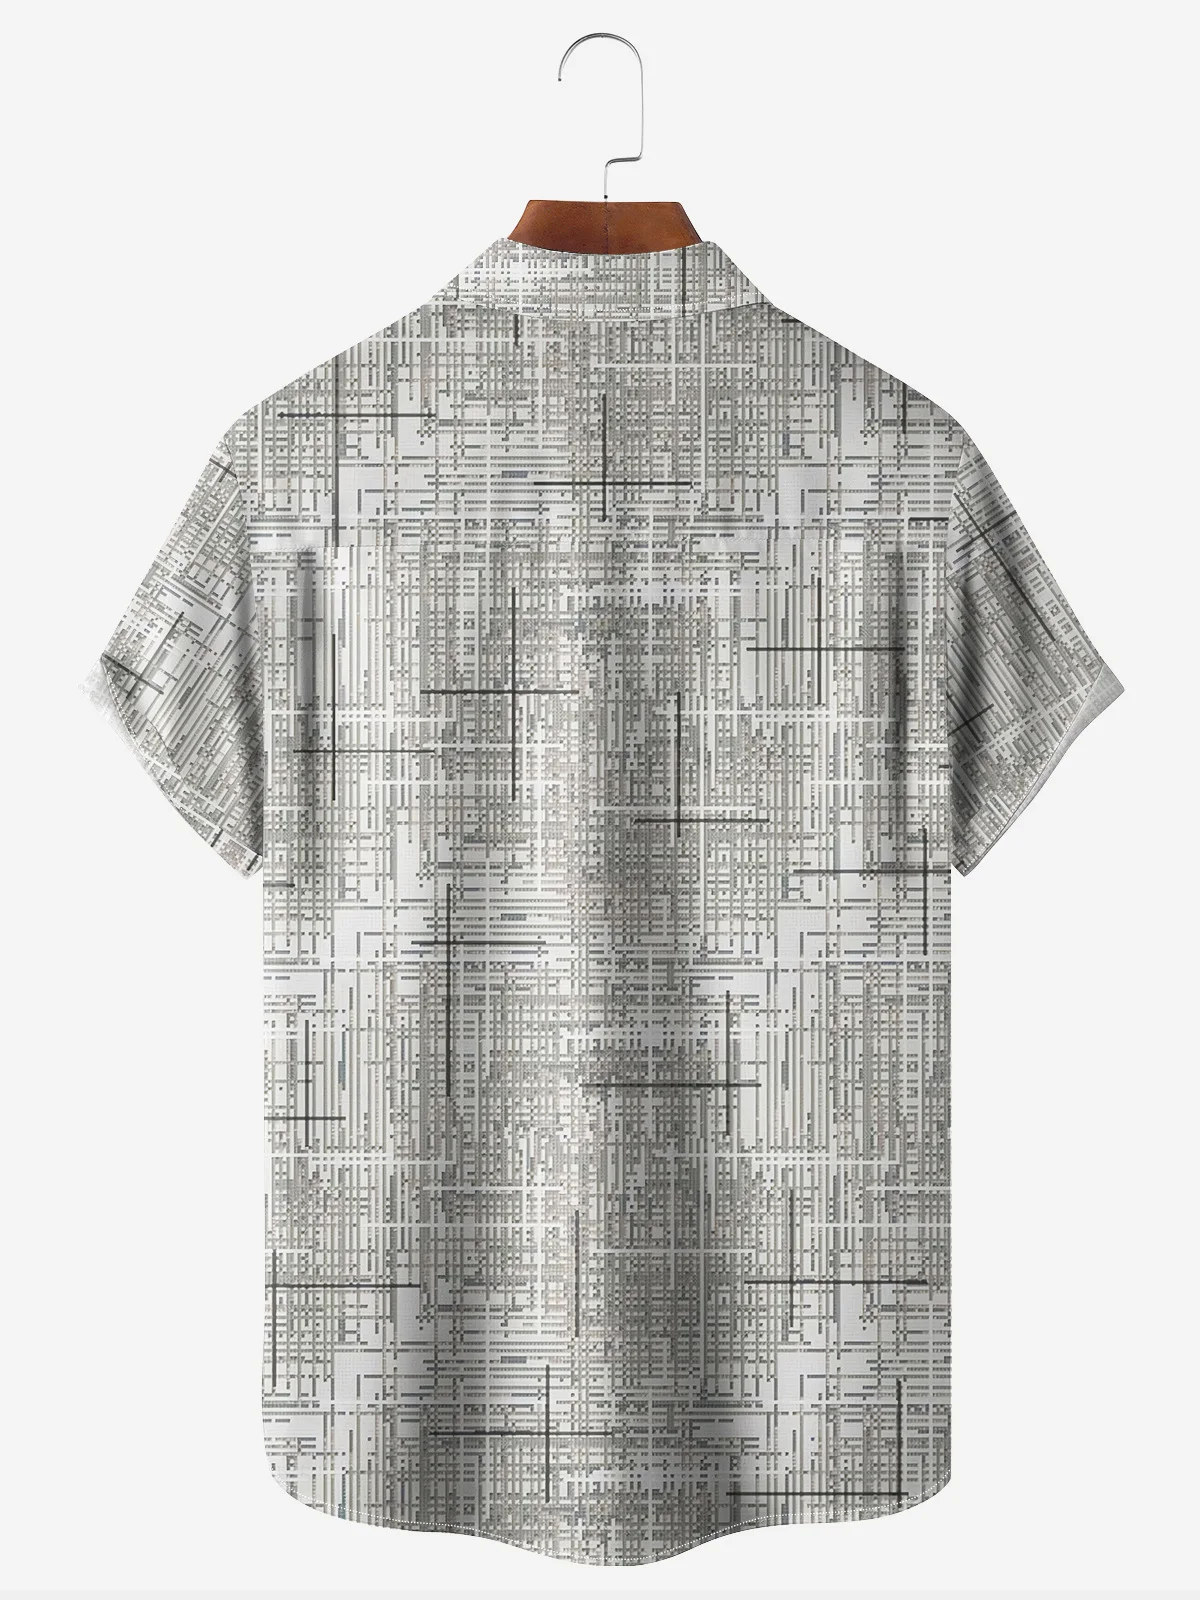 Hardaddy Classic Button Down Hawaiian Shirt Gray Abstract Chest Pocket Short Sleeve Casual Shirt